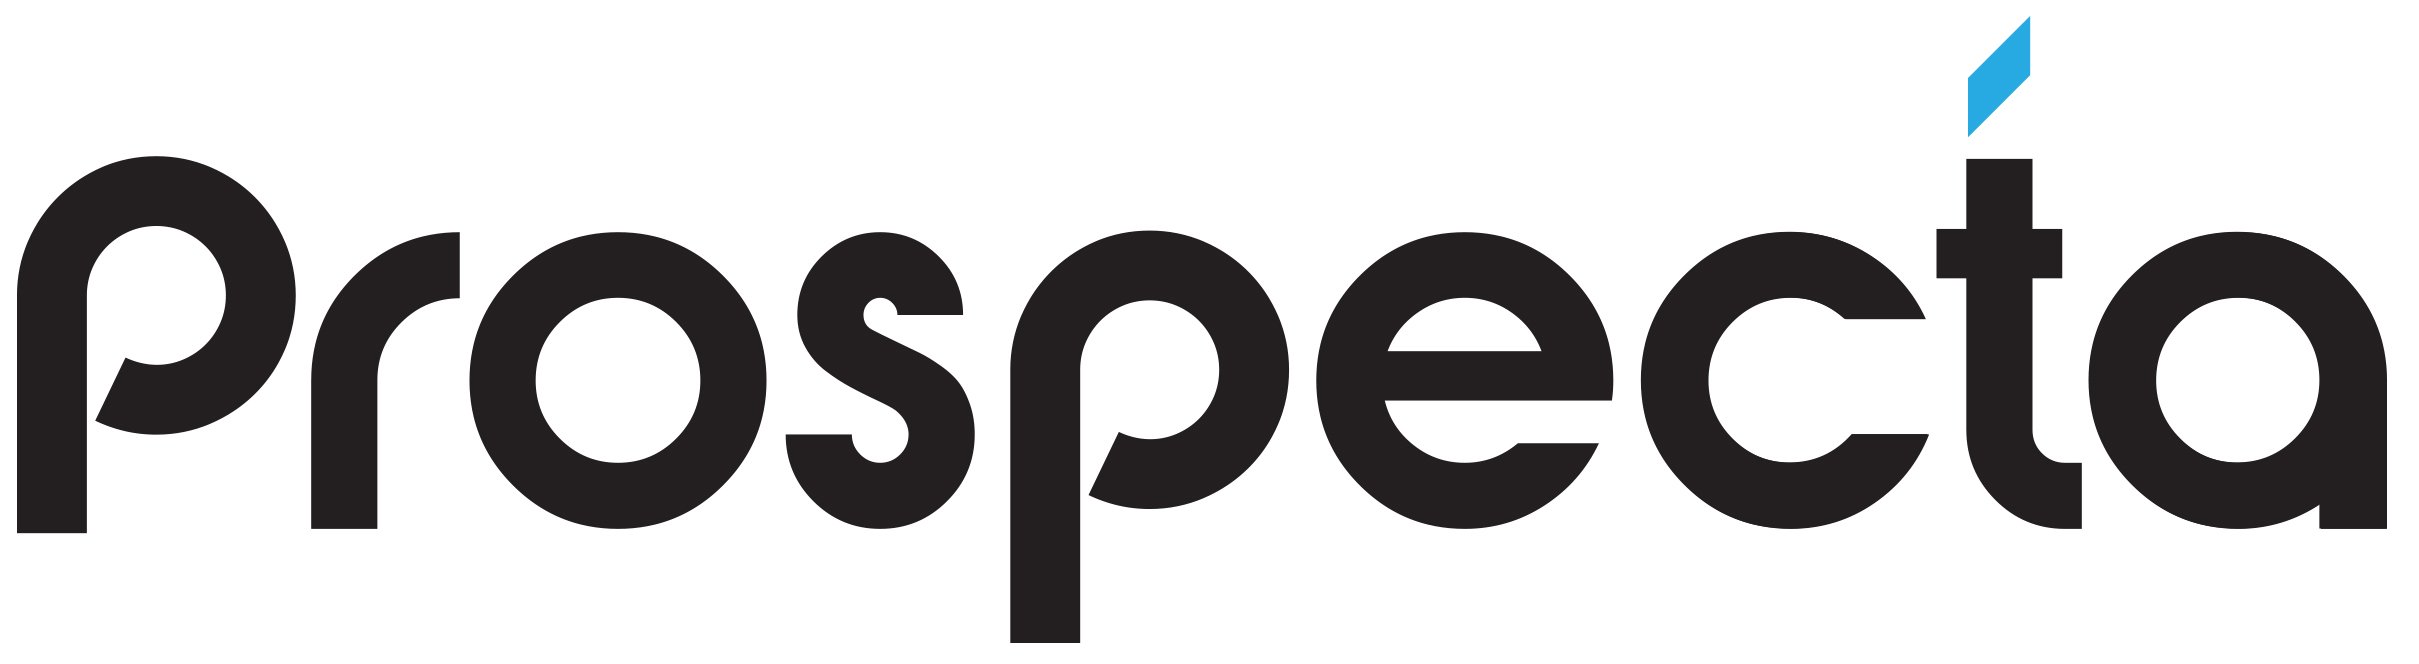 Prospecta logo 2 (1)